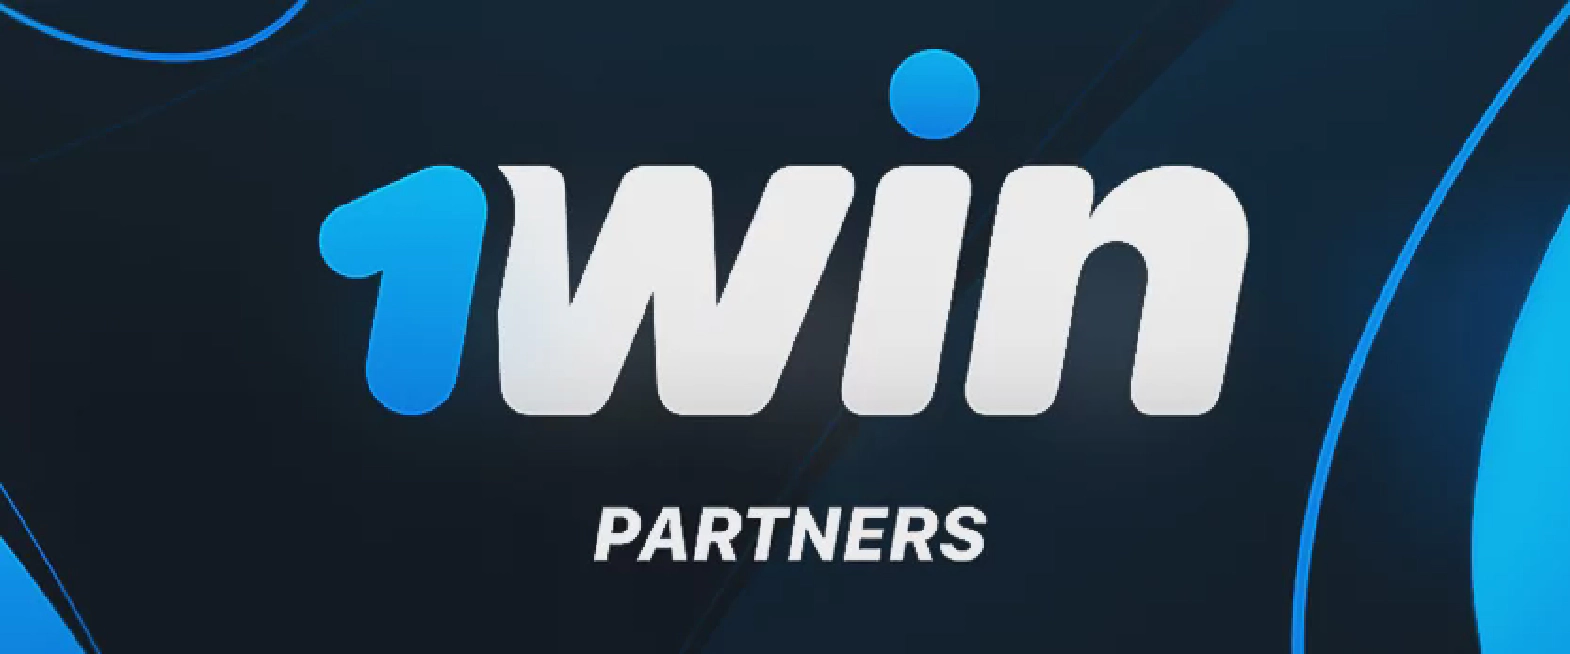 1win partners